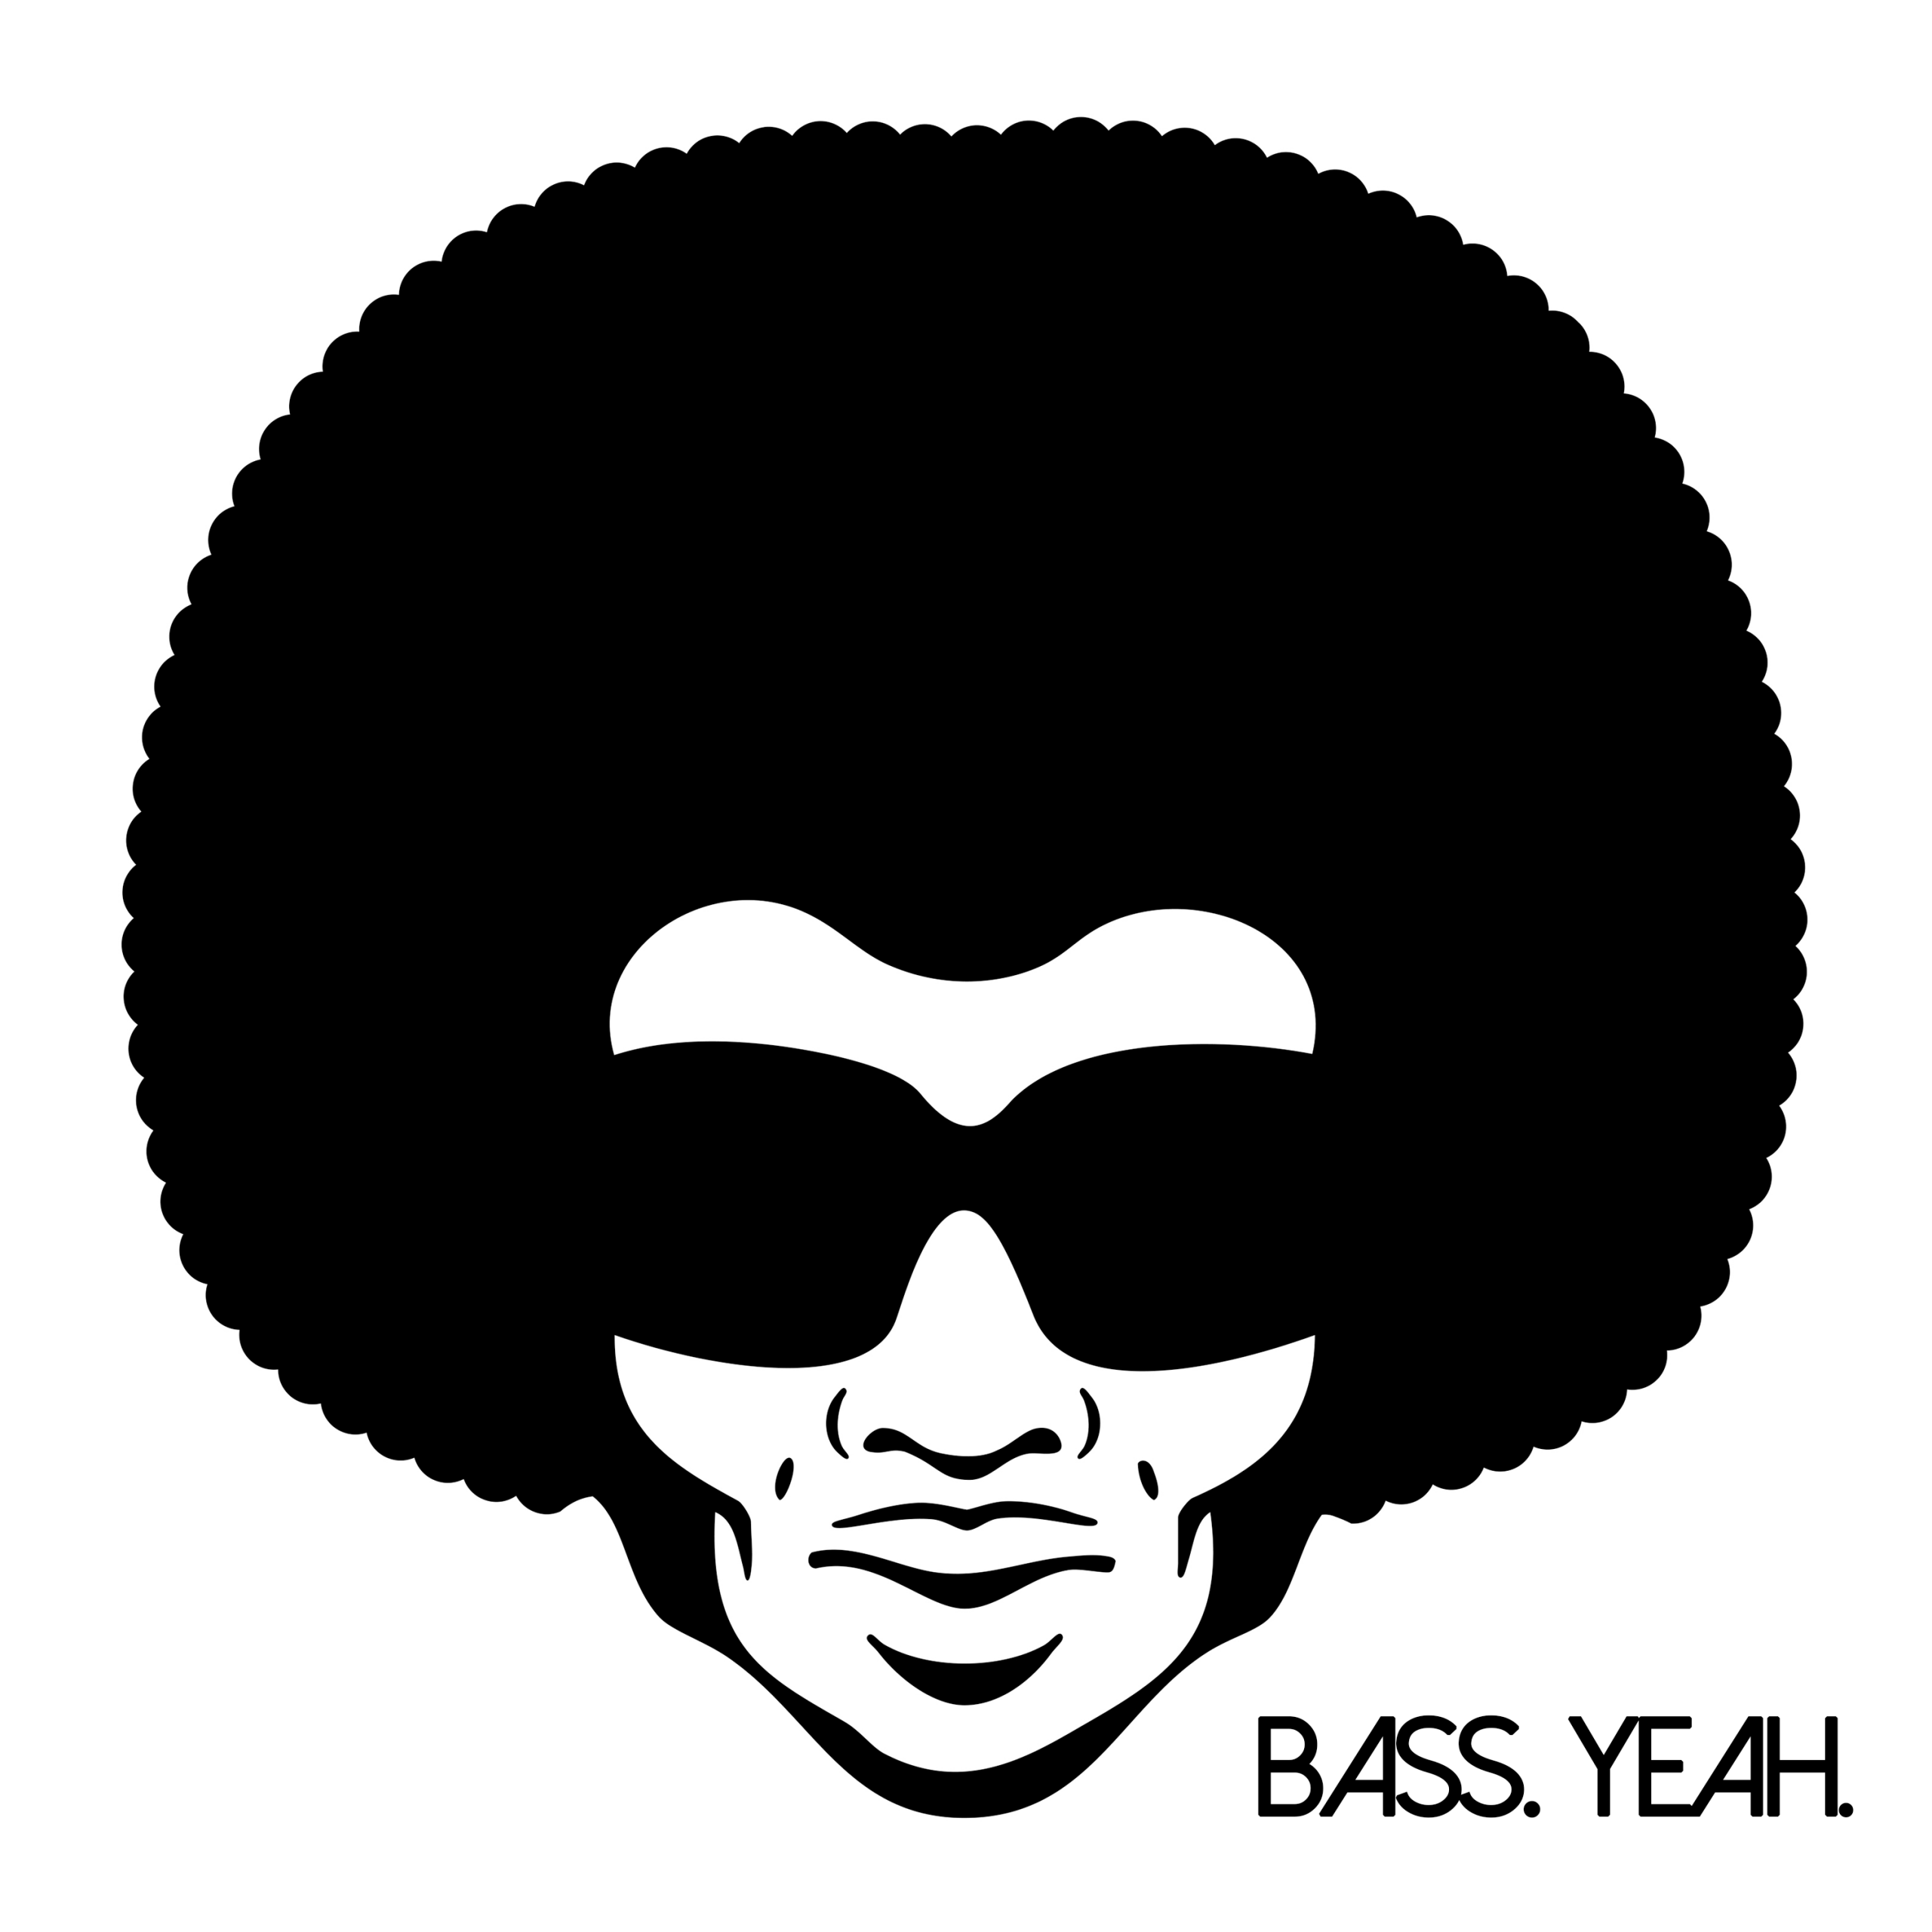 Bass. Yeah.